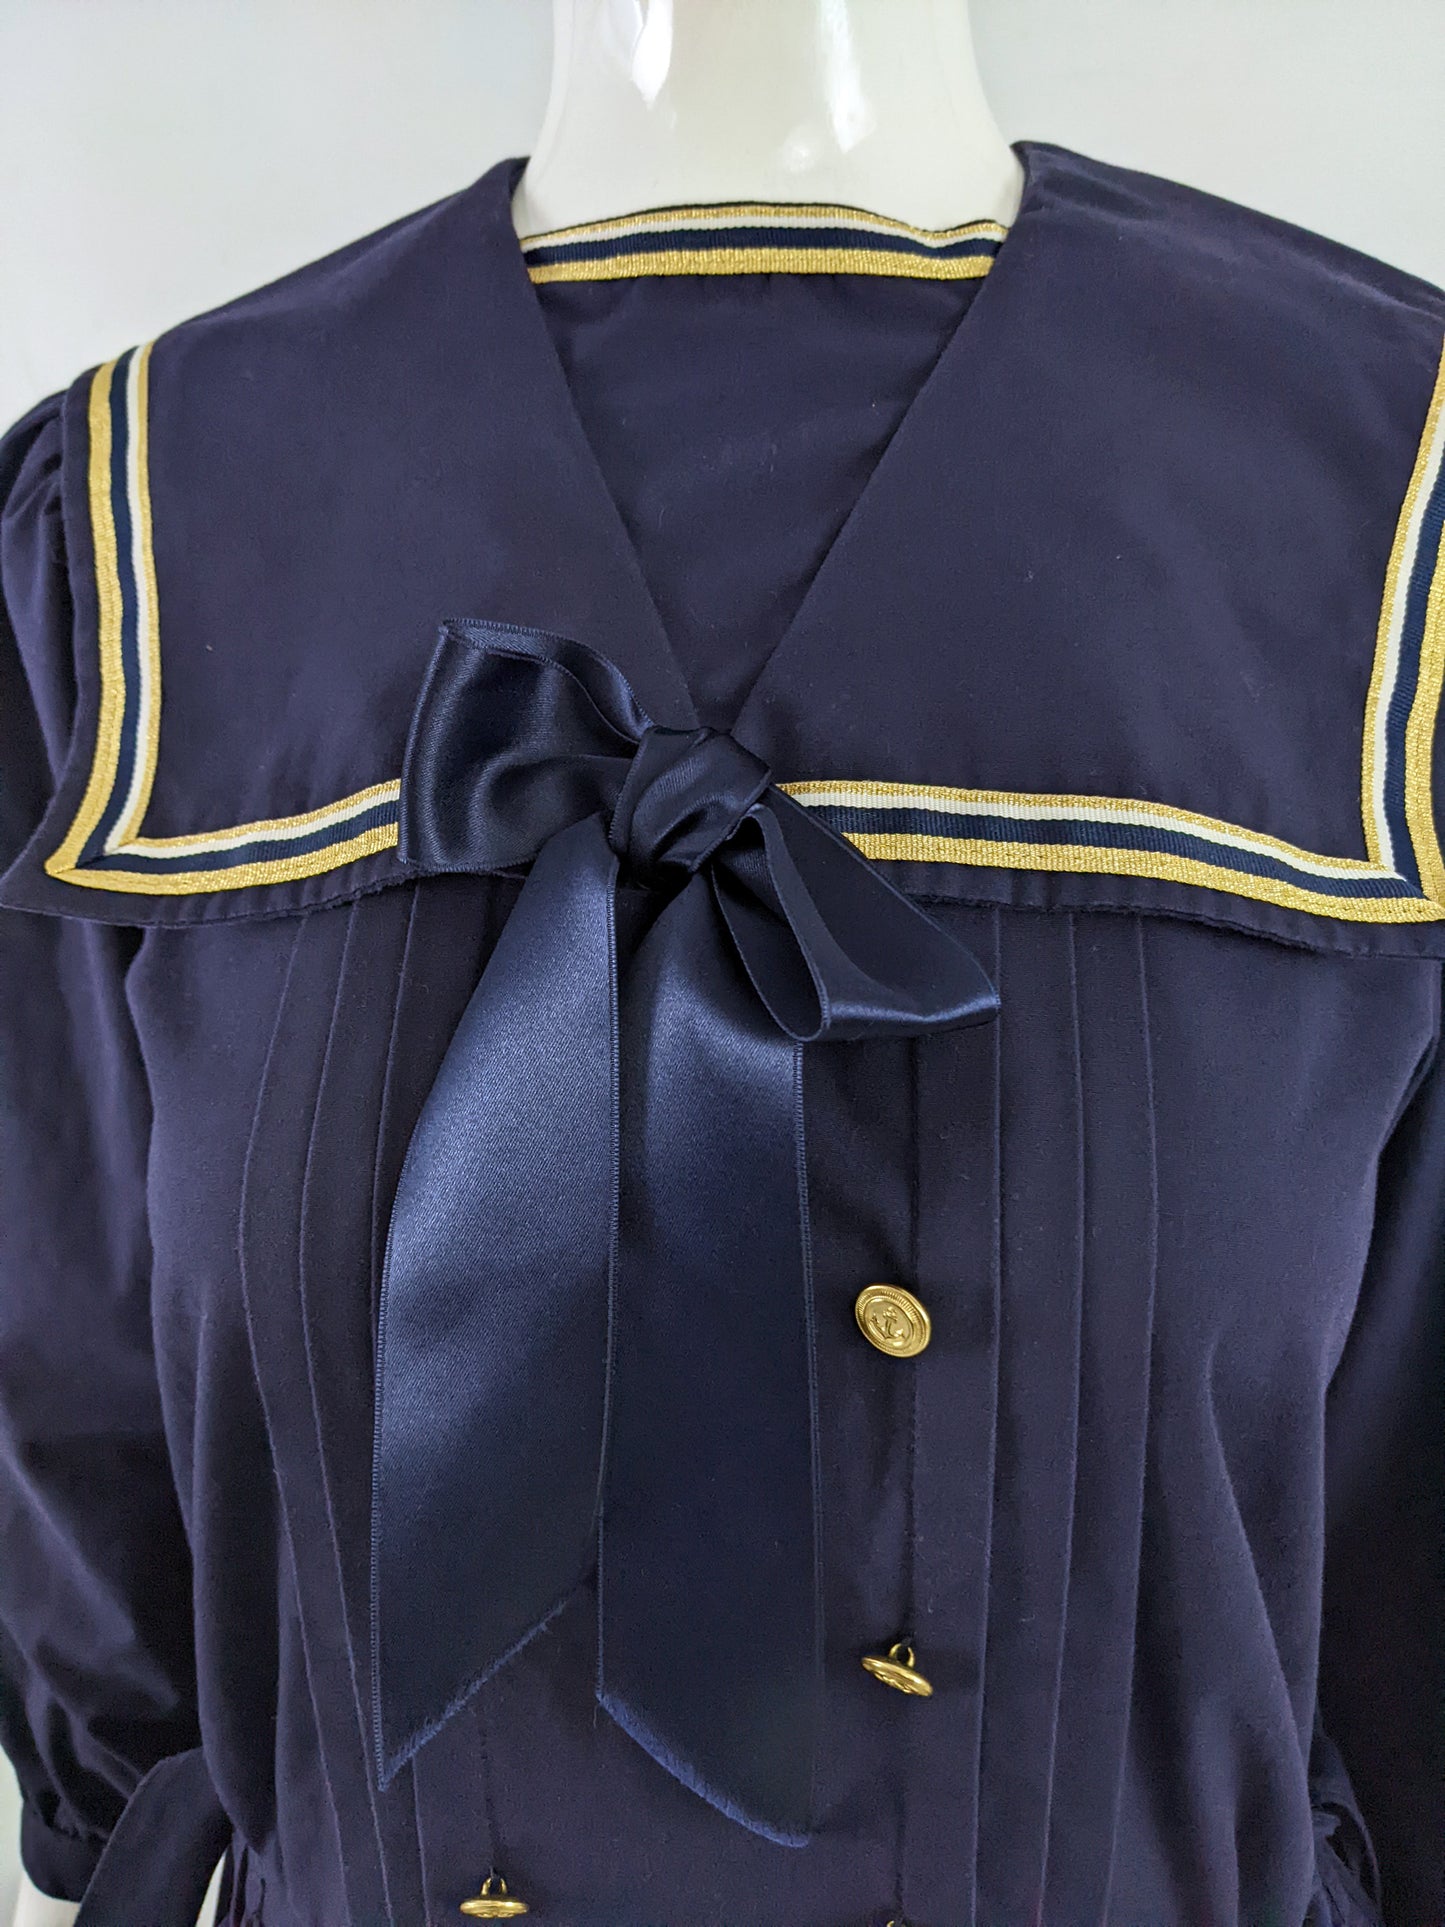 Vintage Blue Sailor Collar Pussybow Dress, 1980s